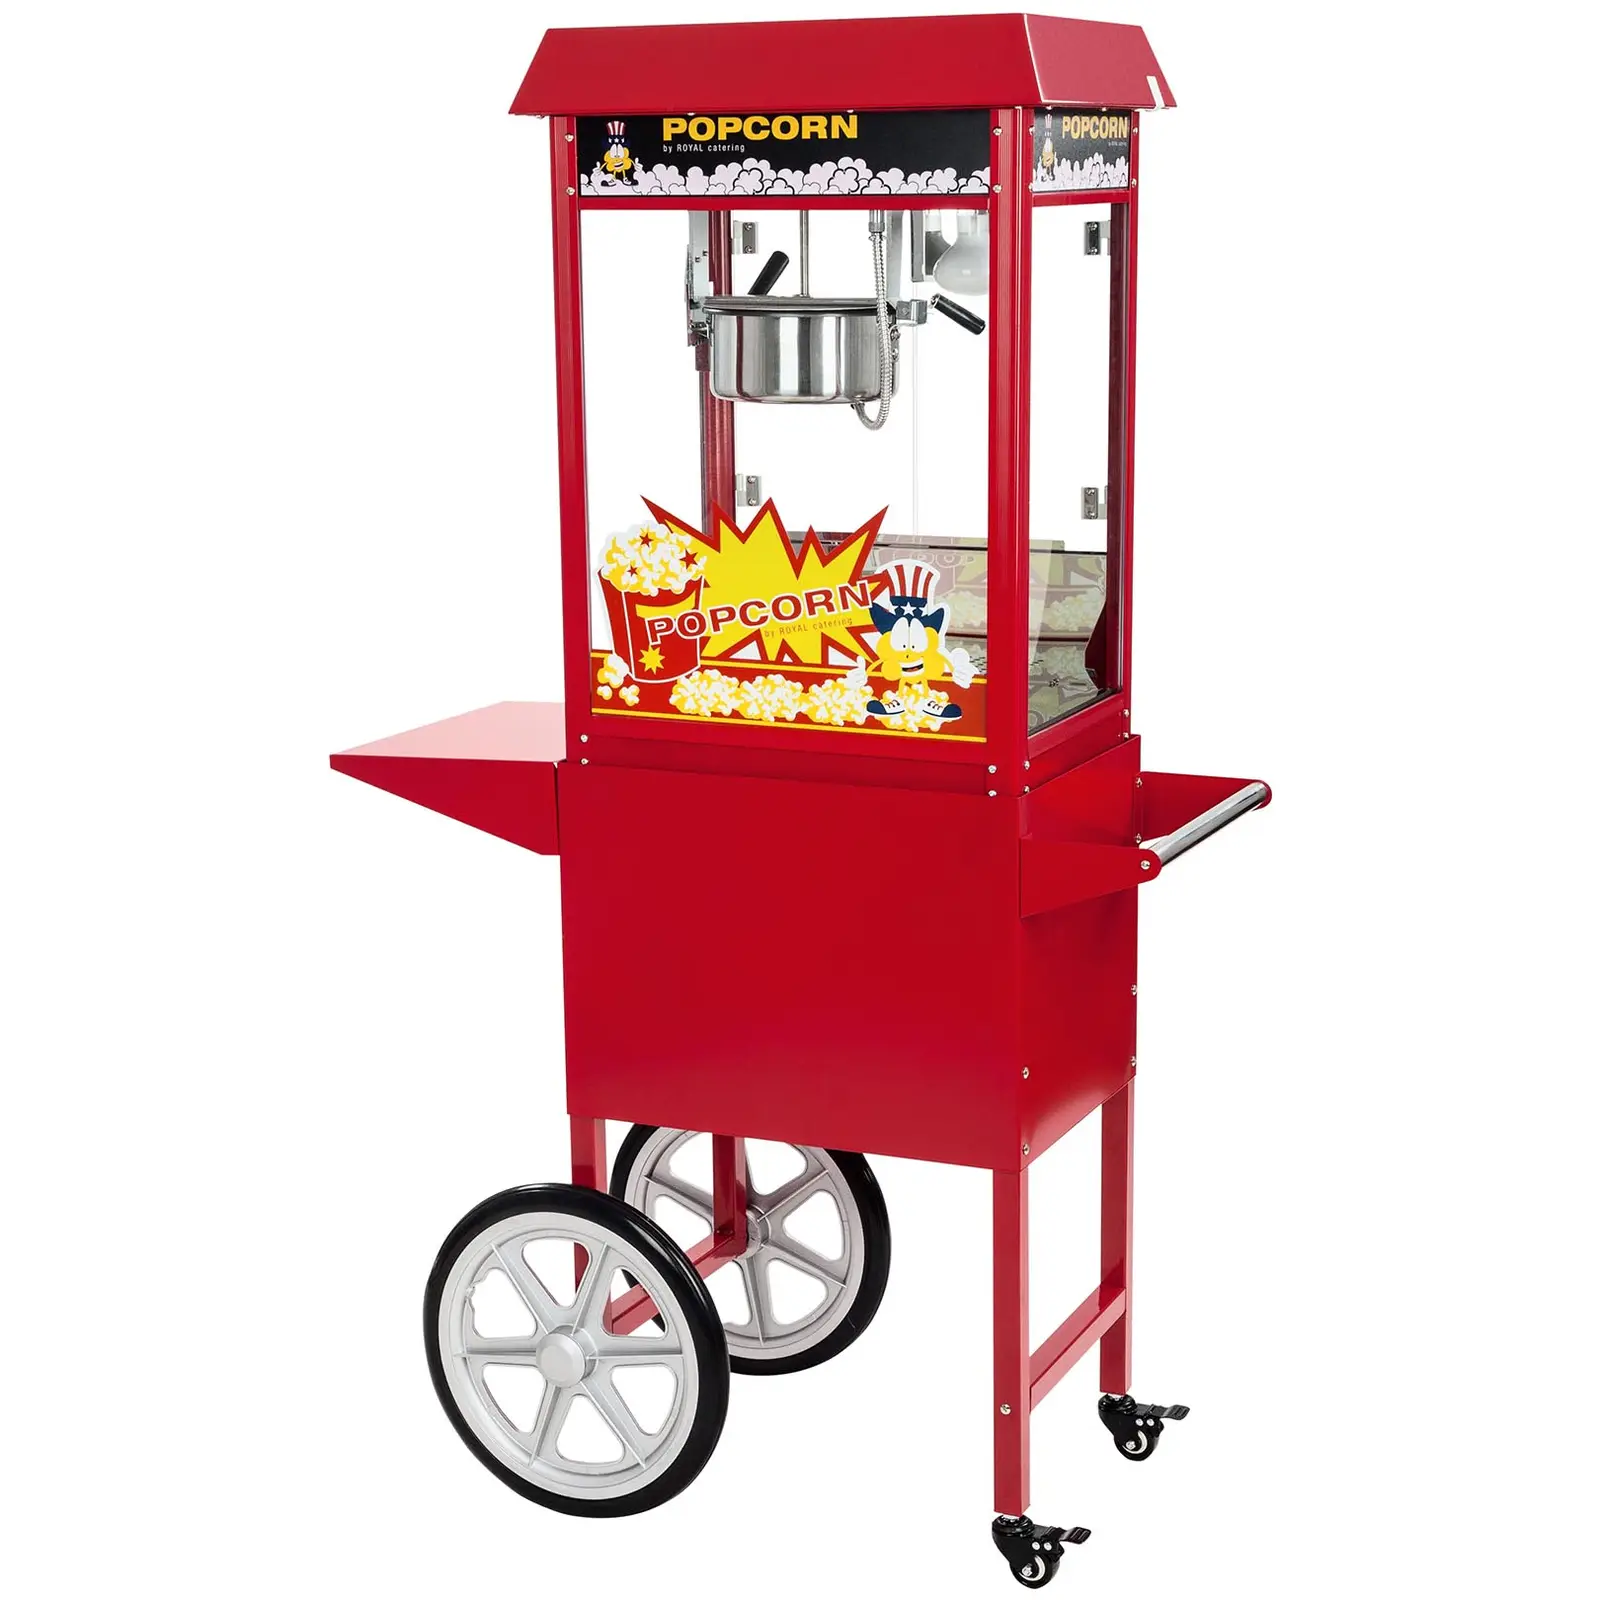 Popcorn machine with cart - Red